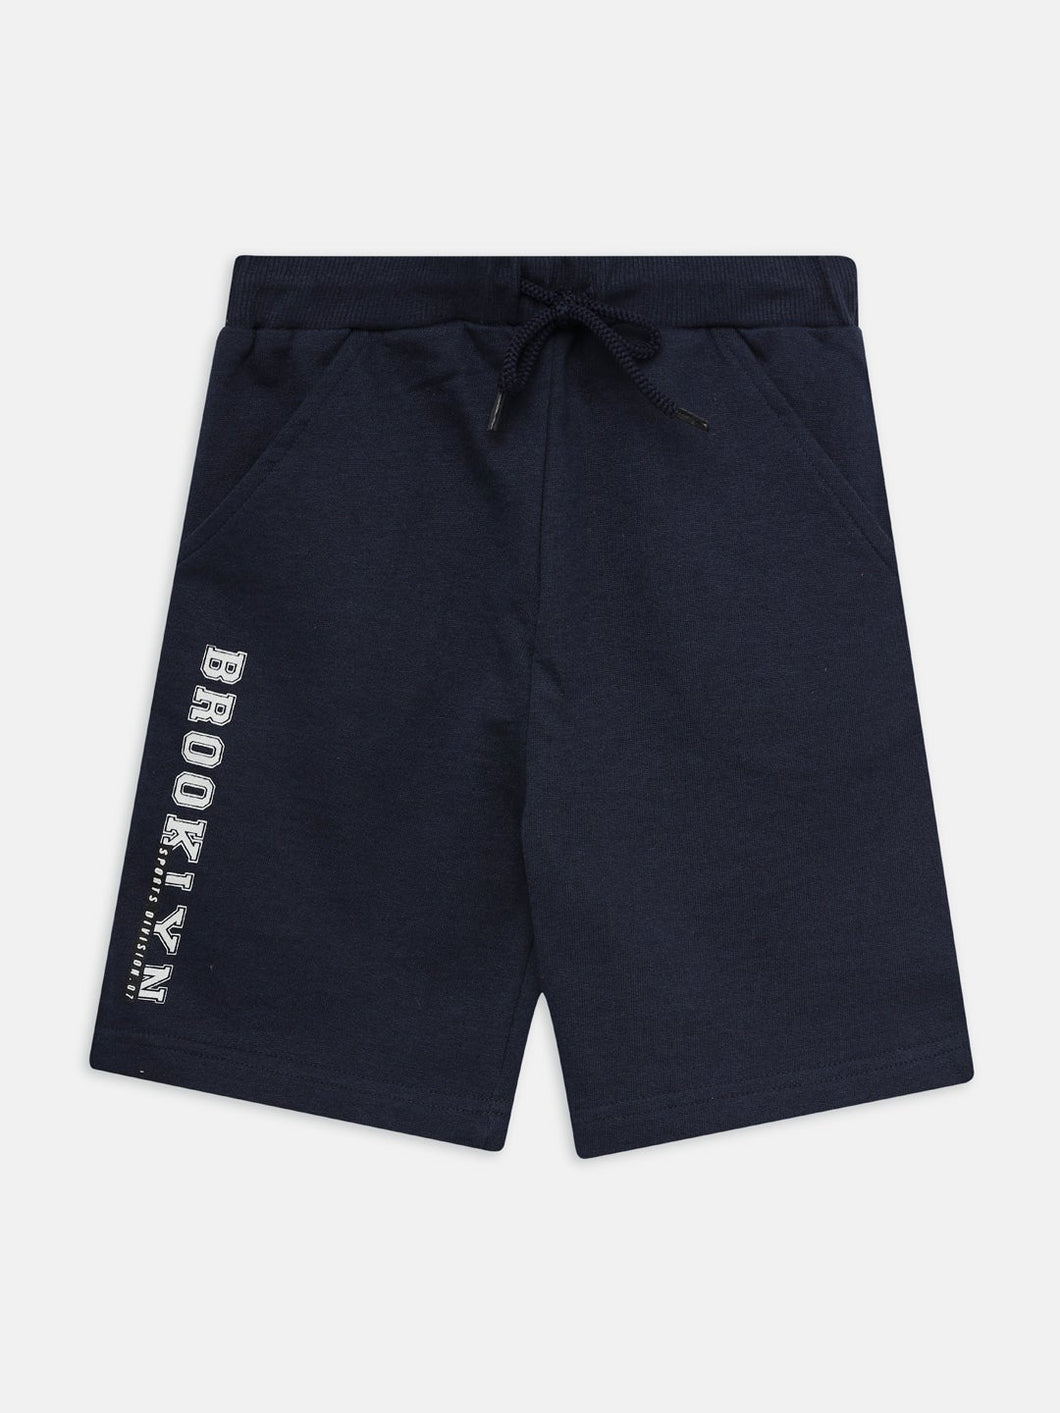 Boys Shorts (Style-OTB211106) Navy Blue